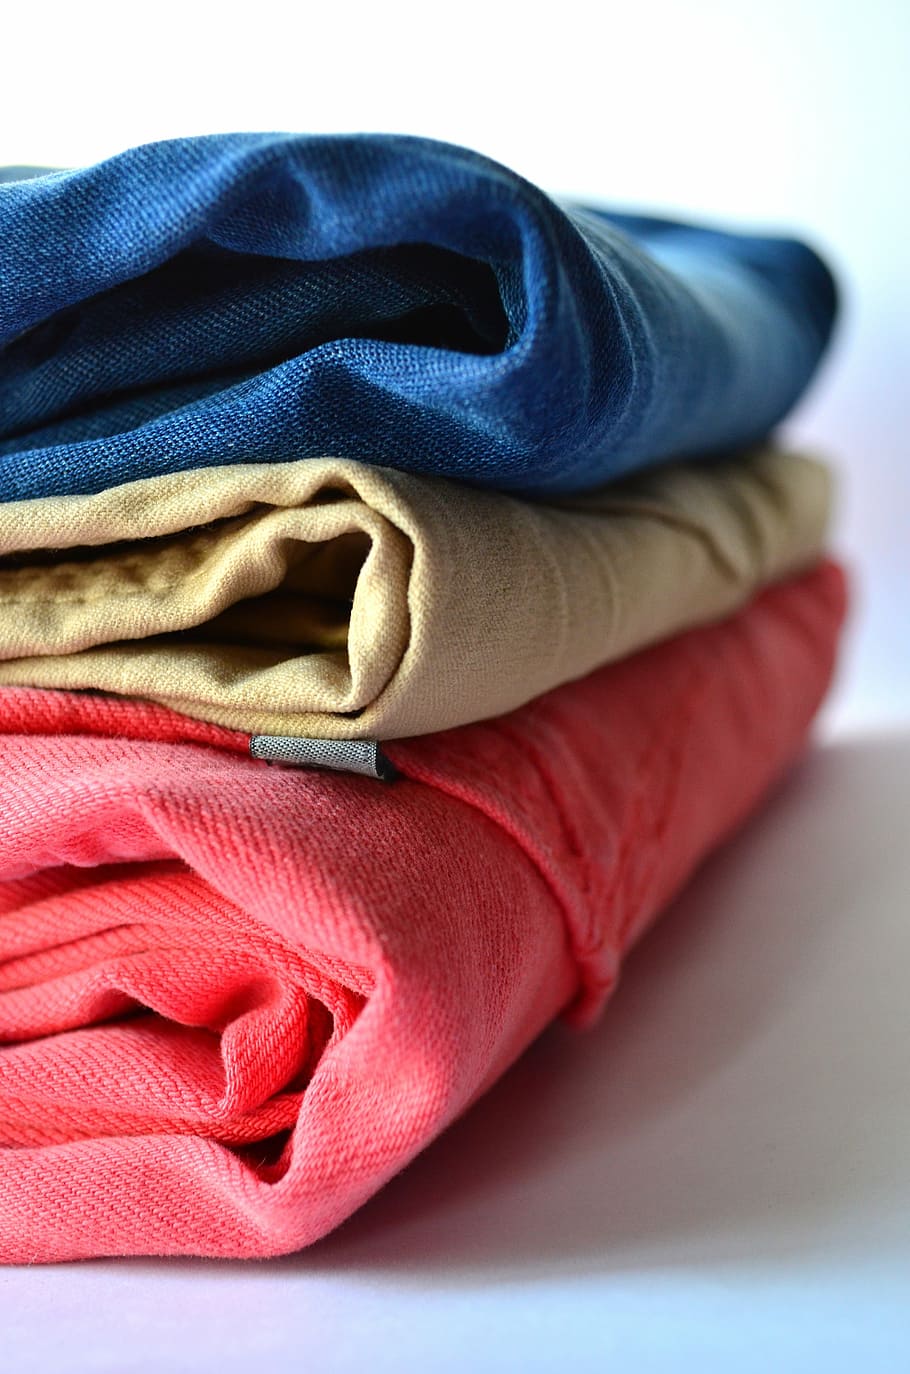 tres, jeans, blanco, superficie, ropa, pantalones, pila, rosa, azul, indumentaria